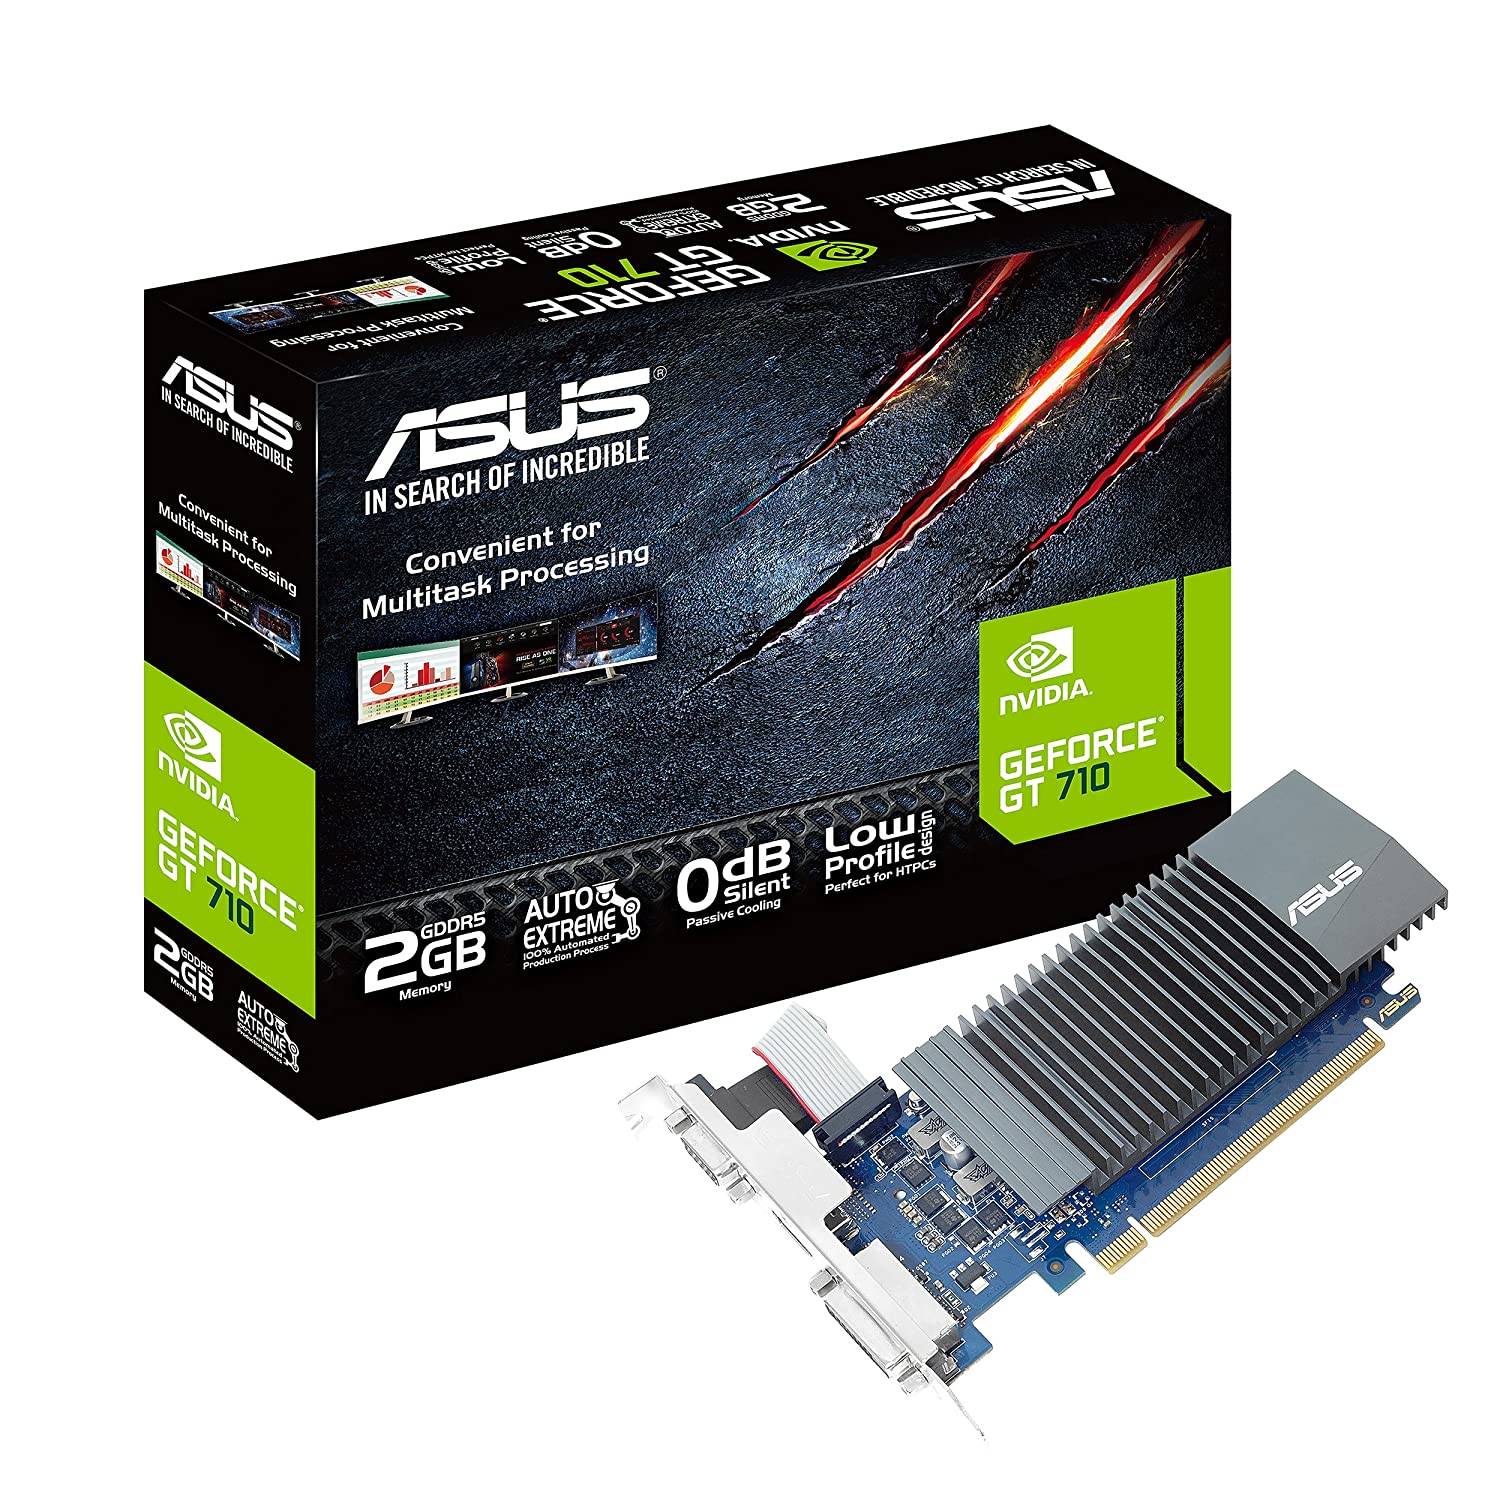 Asus GeForce GT 710 2GB GDDR5 HDMI VGA DVI Graphics Card Graphic Cards